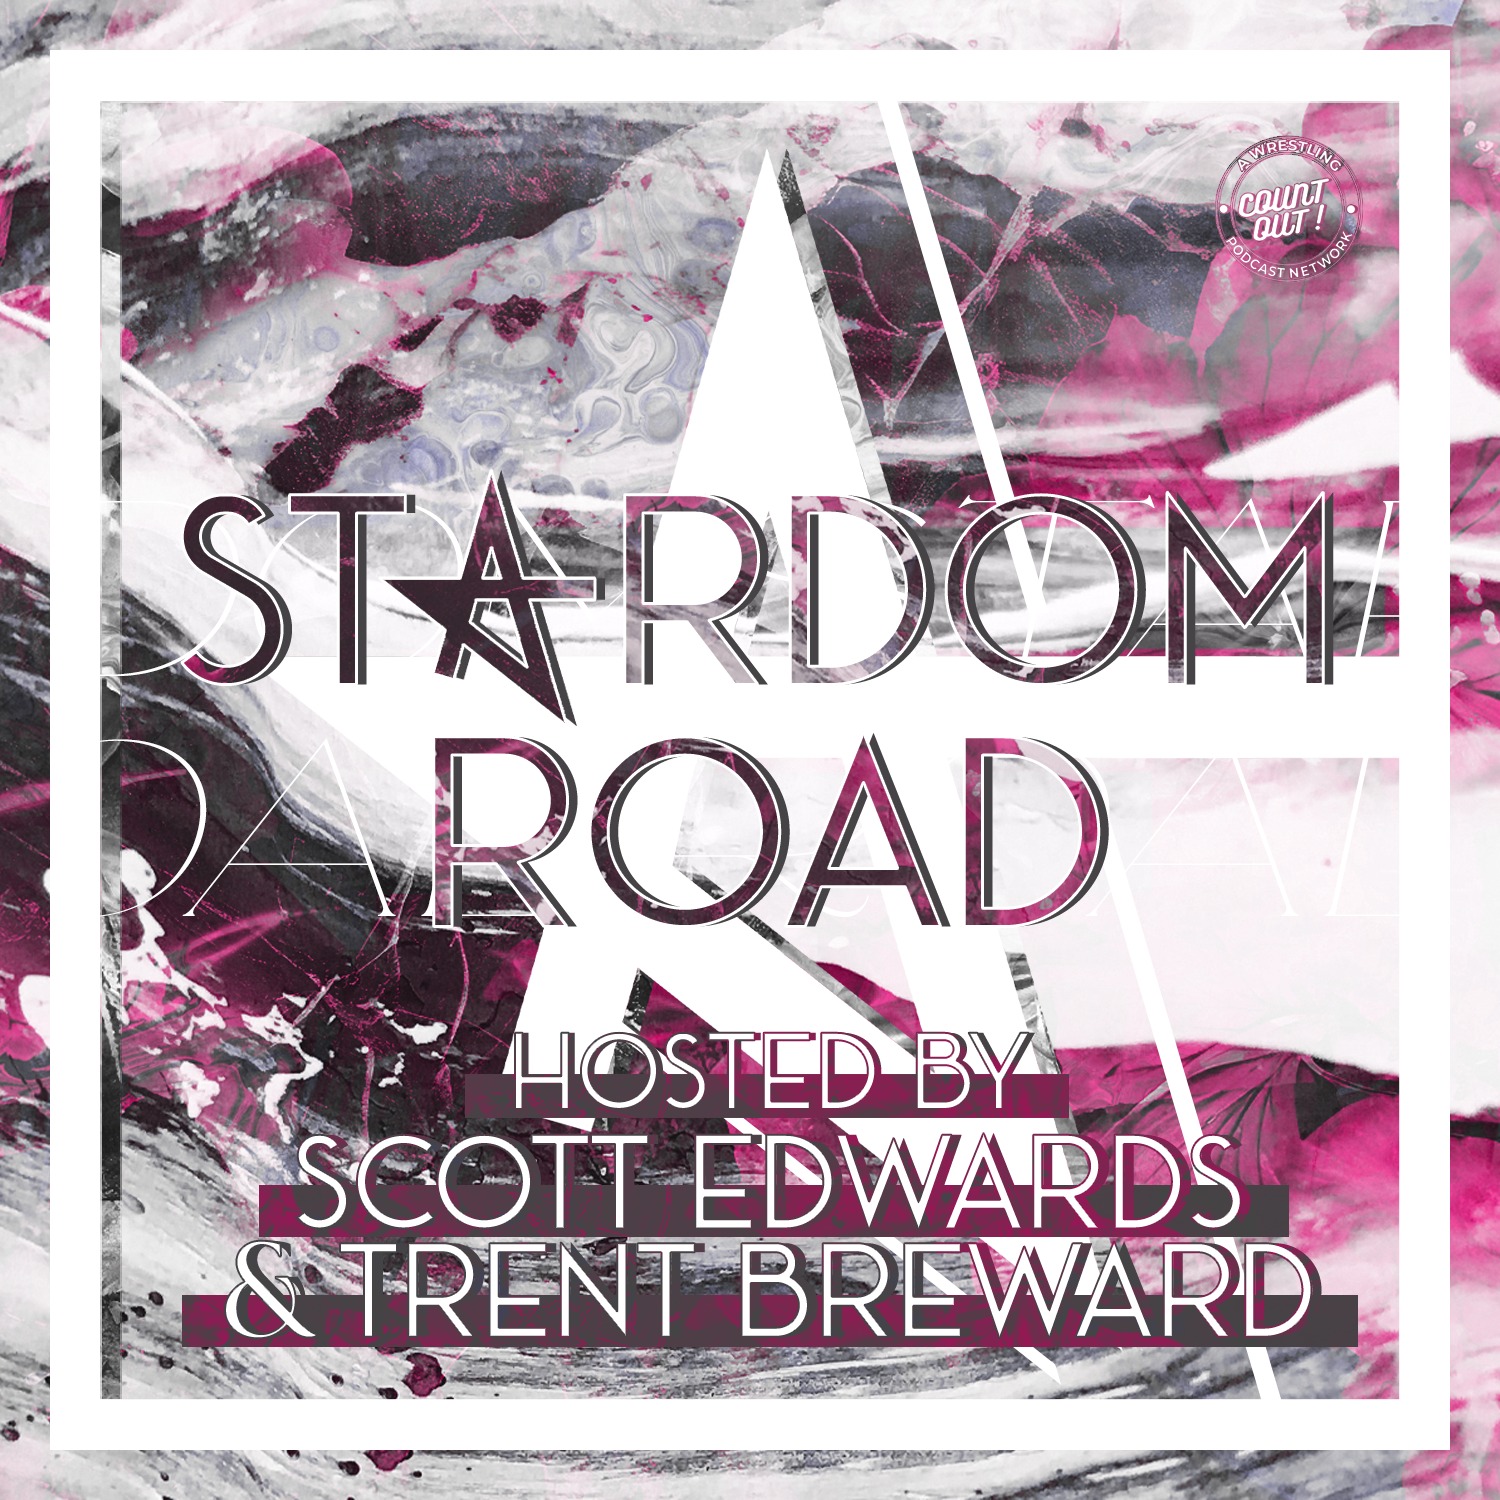 Stardom Road 39: Utami Hayashishita’s World of Stardom Title Reign - Part II